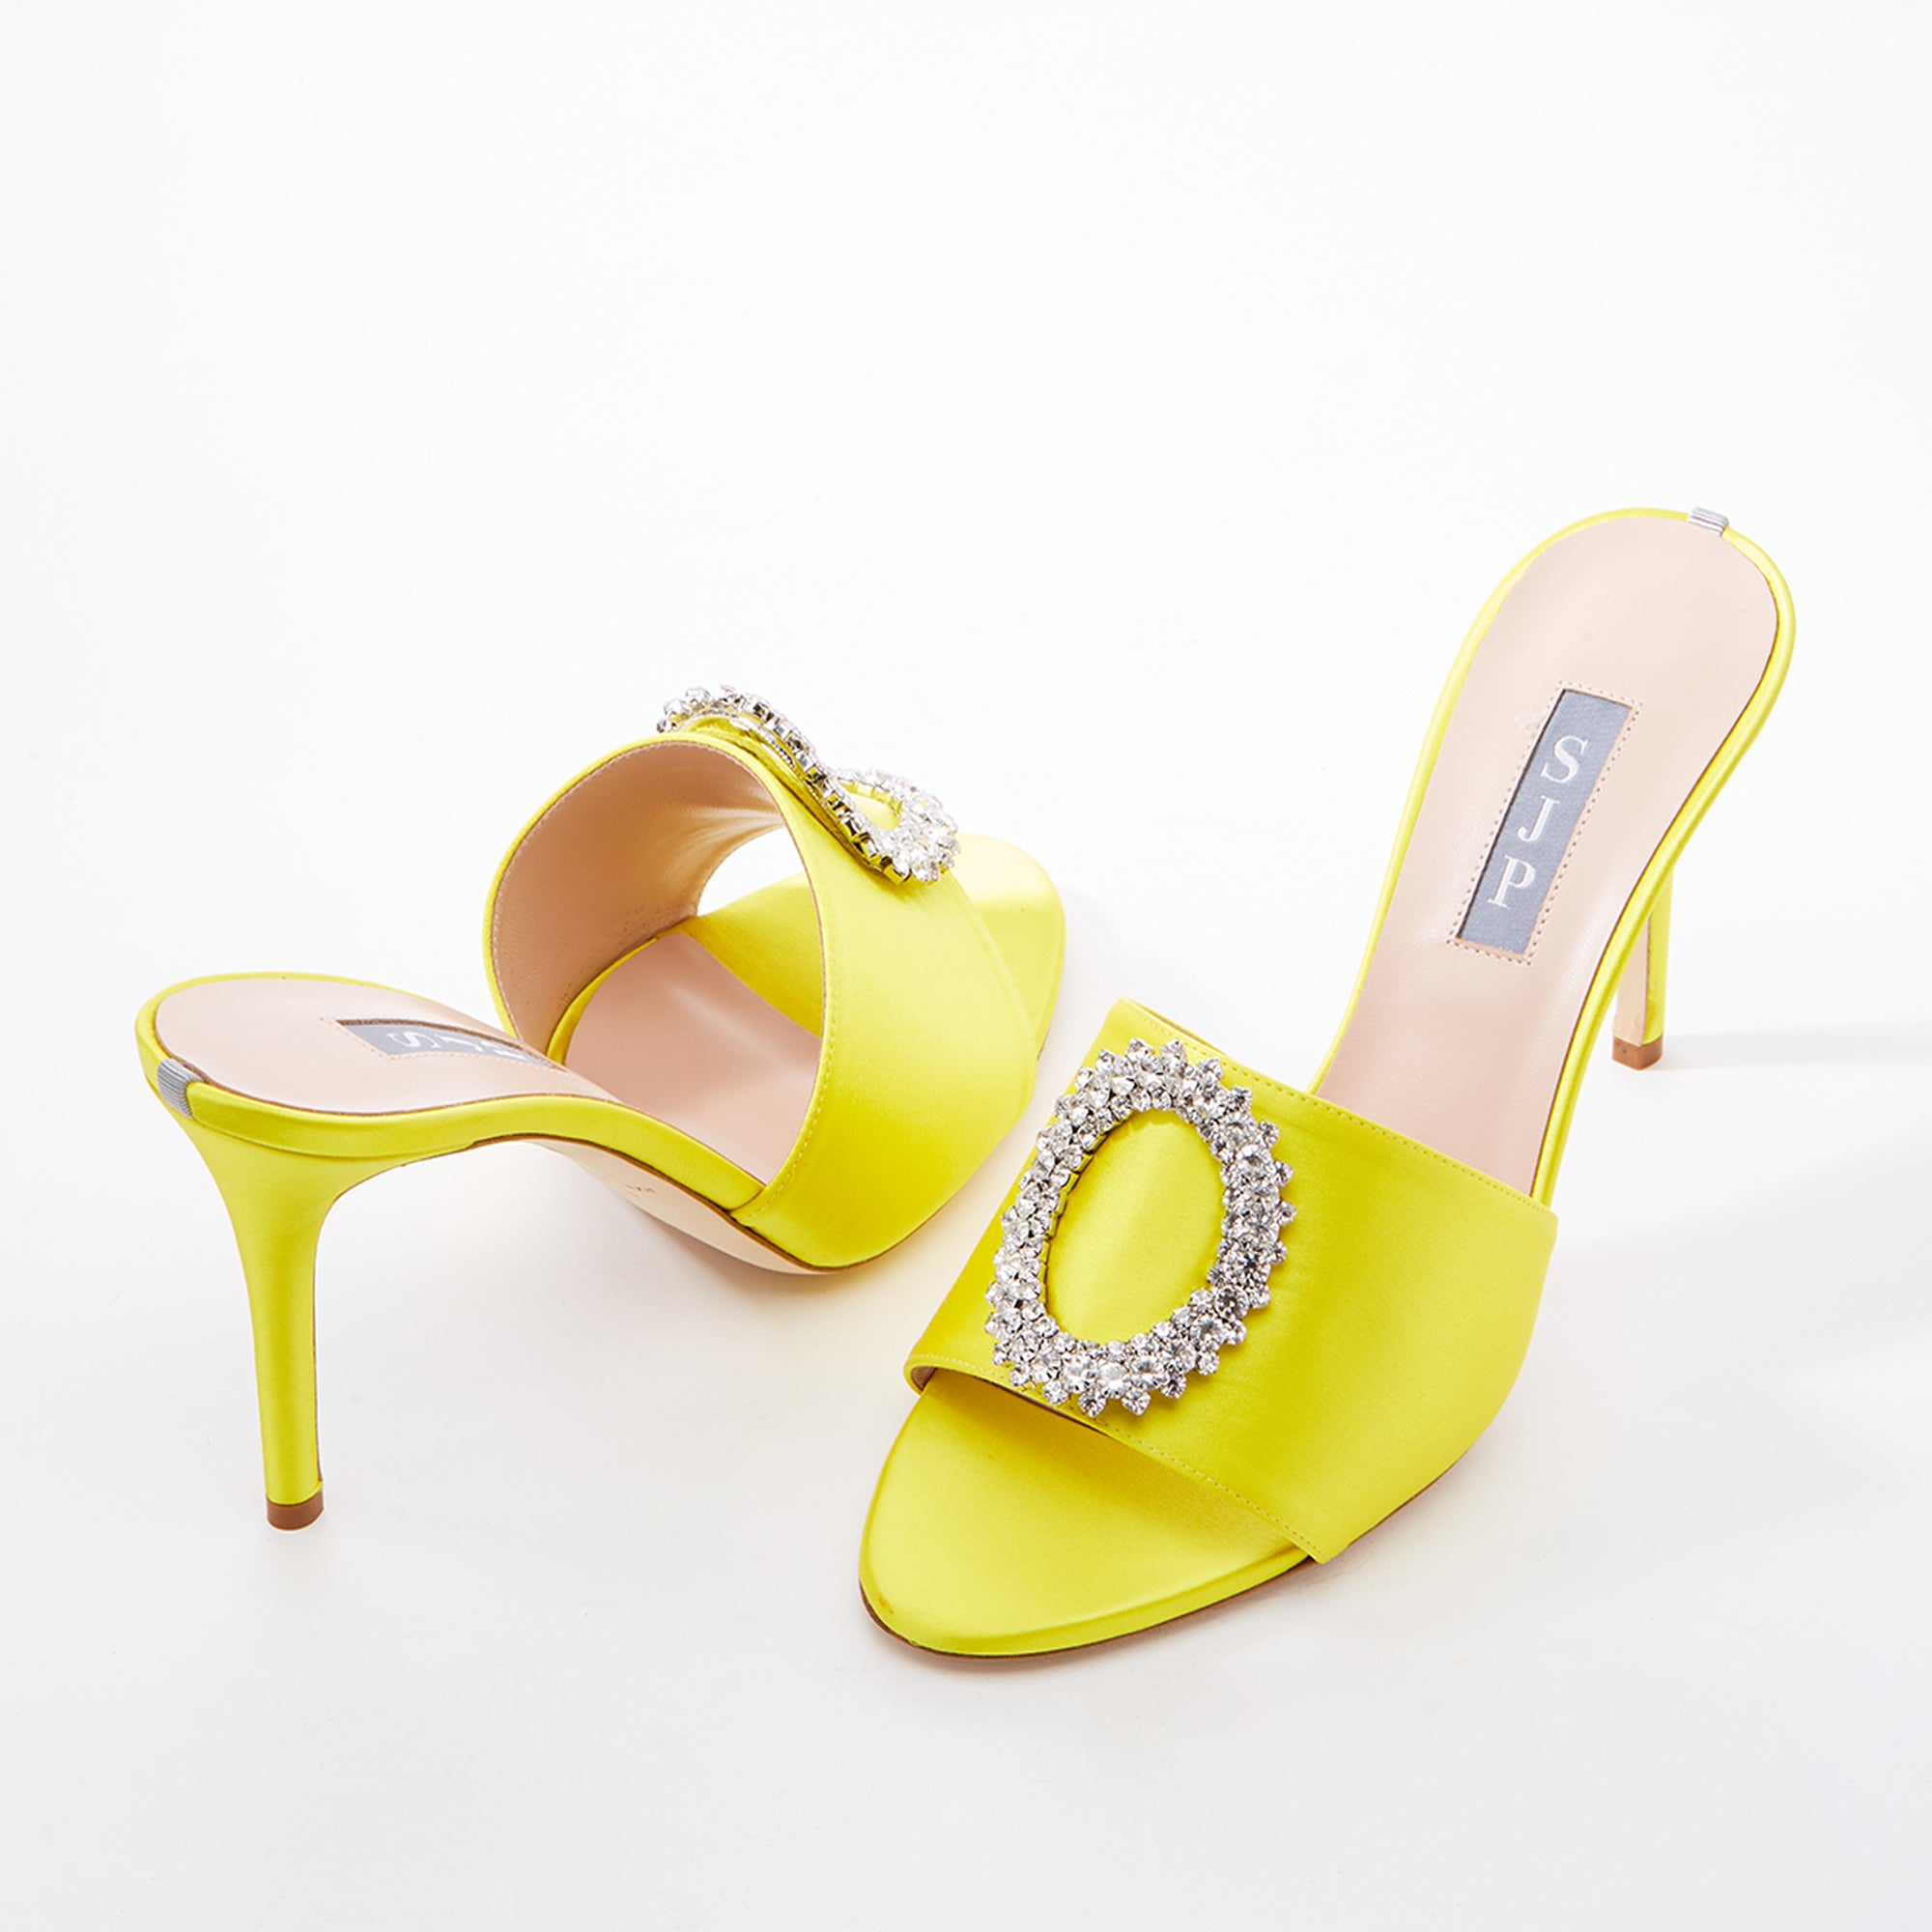 SJP by Sarah Jessica Parker Soleil 90mm Yellow Satin Sandals